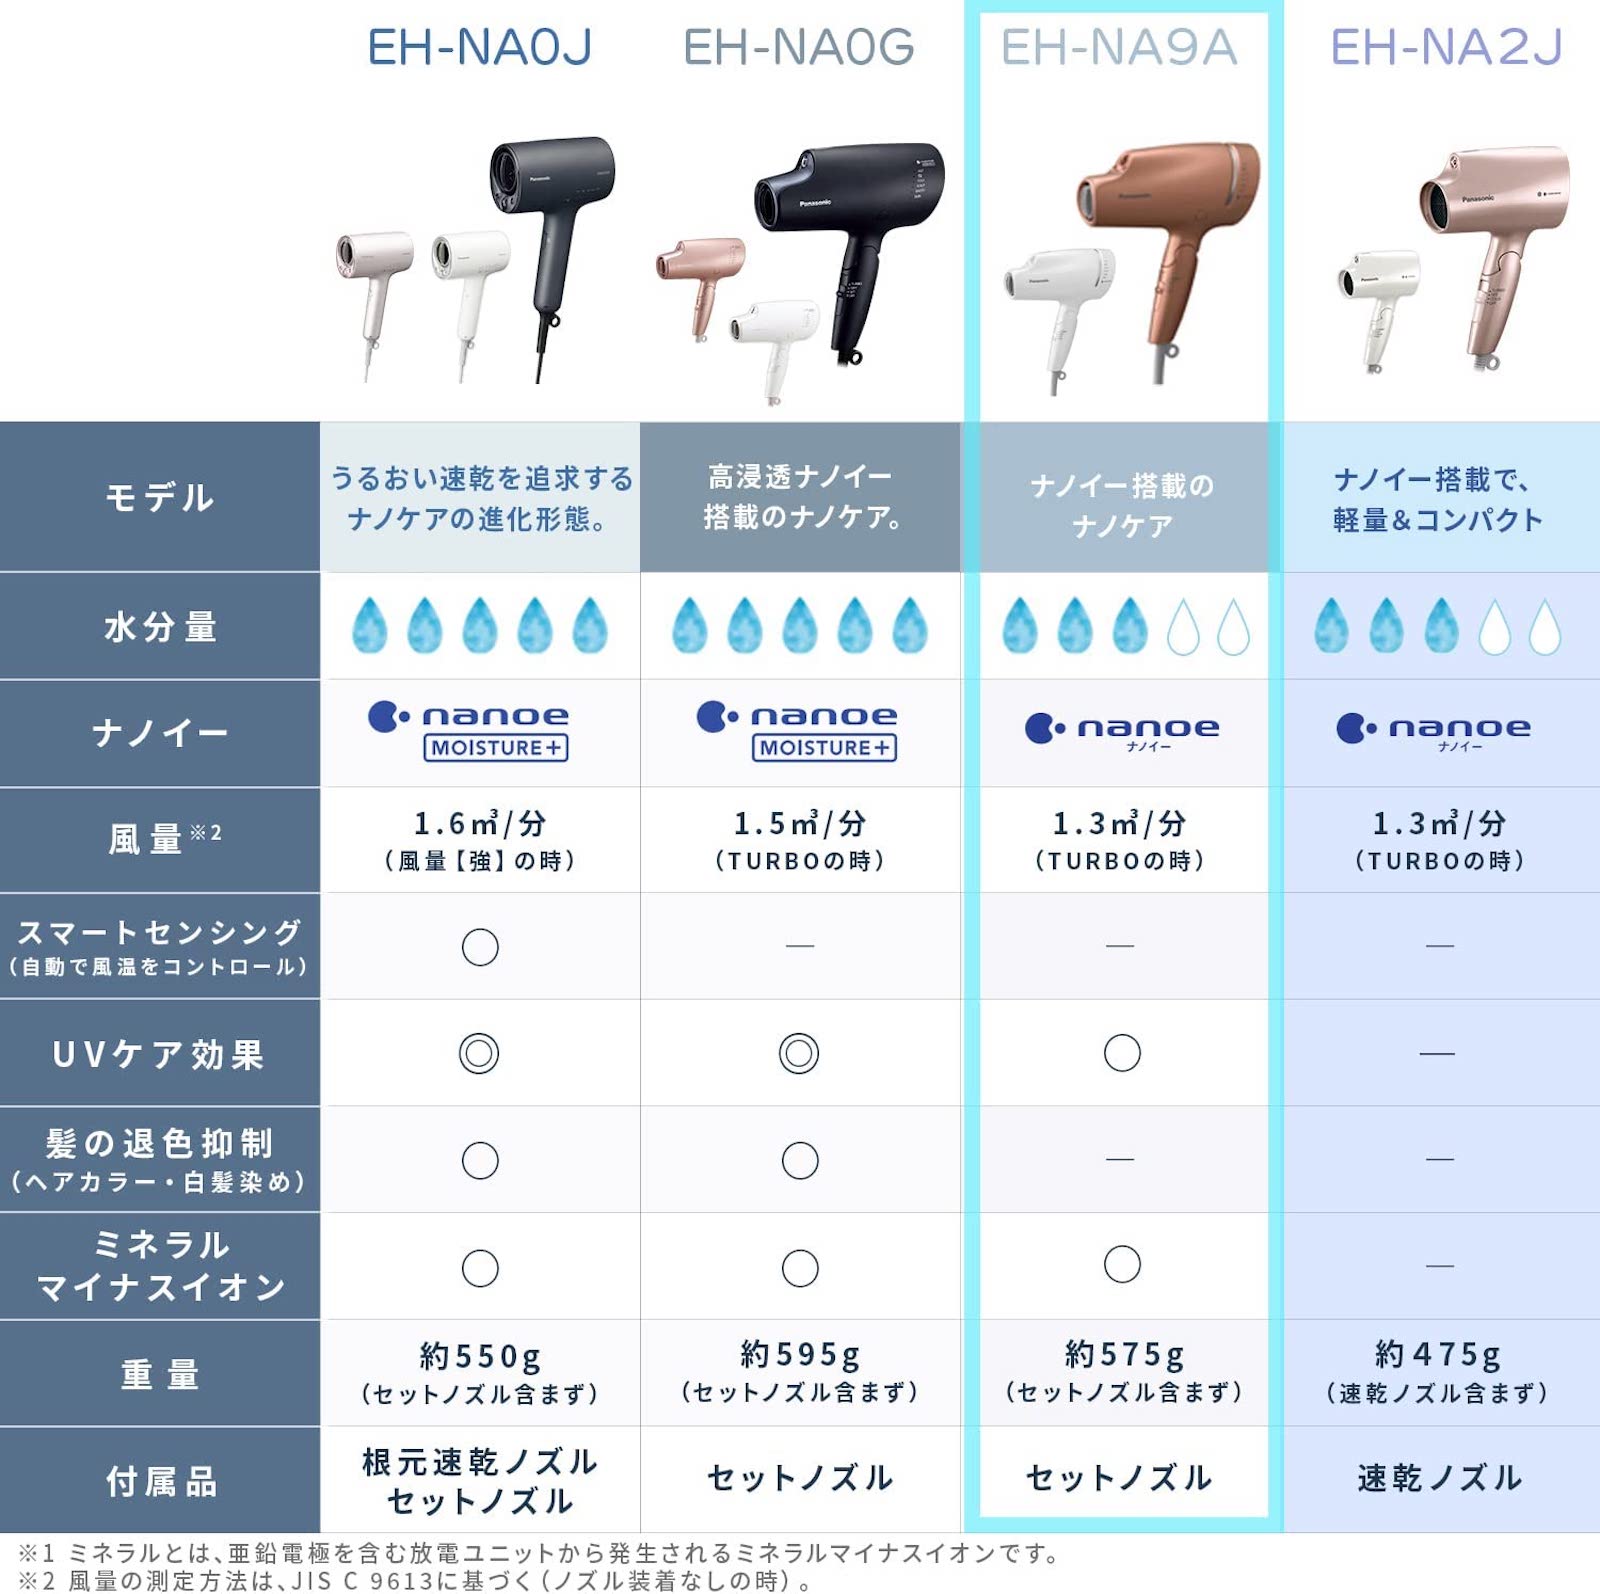 Comparison-chart-for-nanocare-hair-dryer.jpg